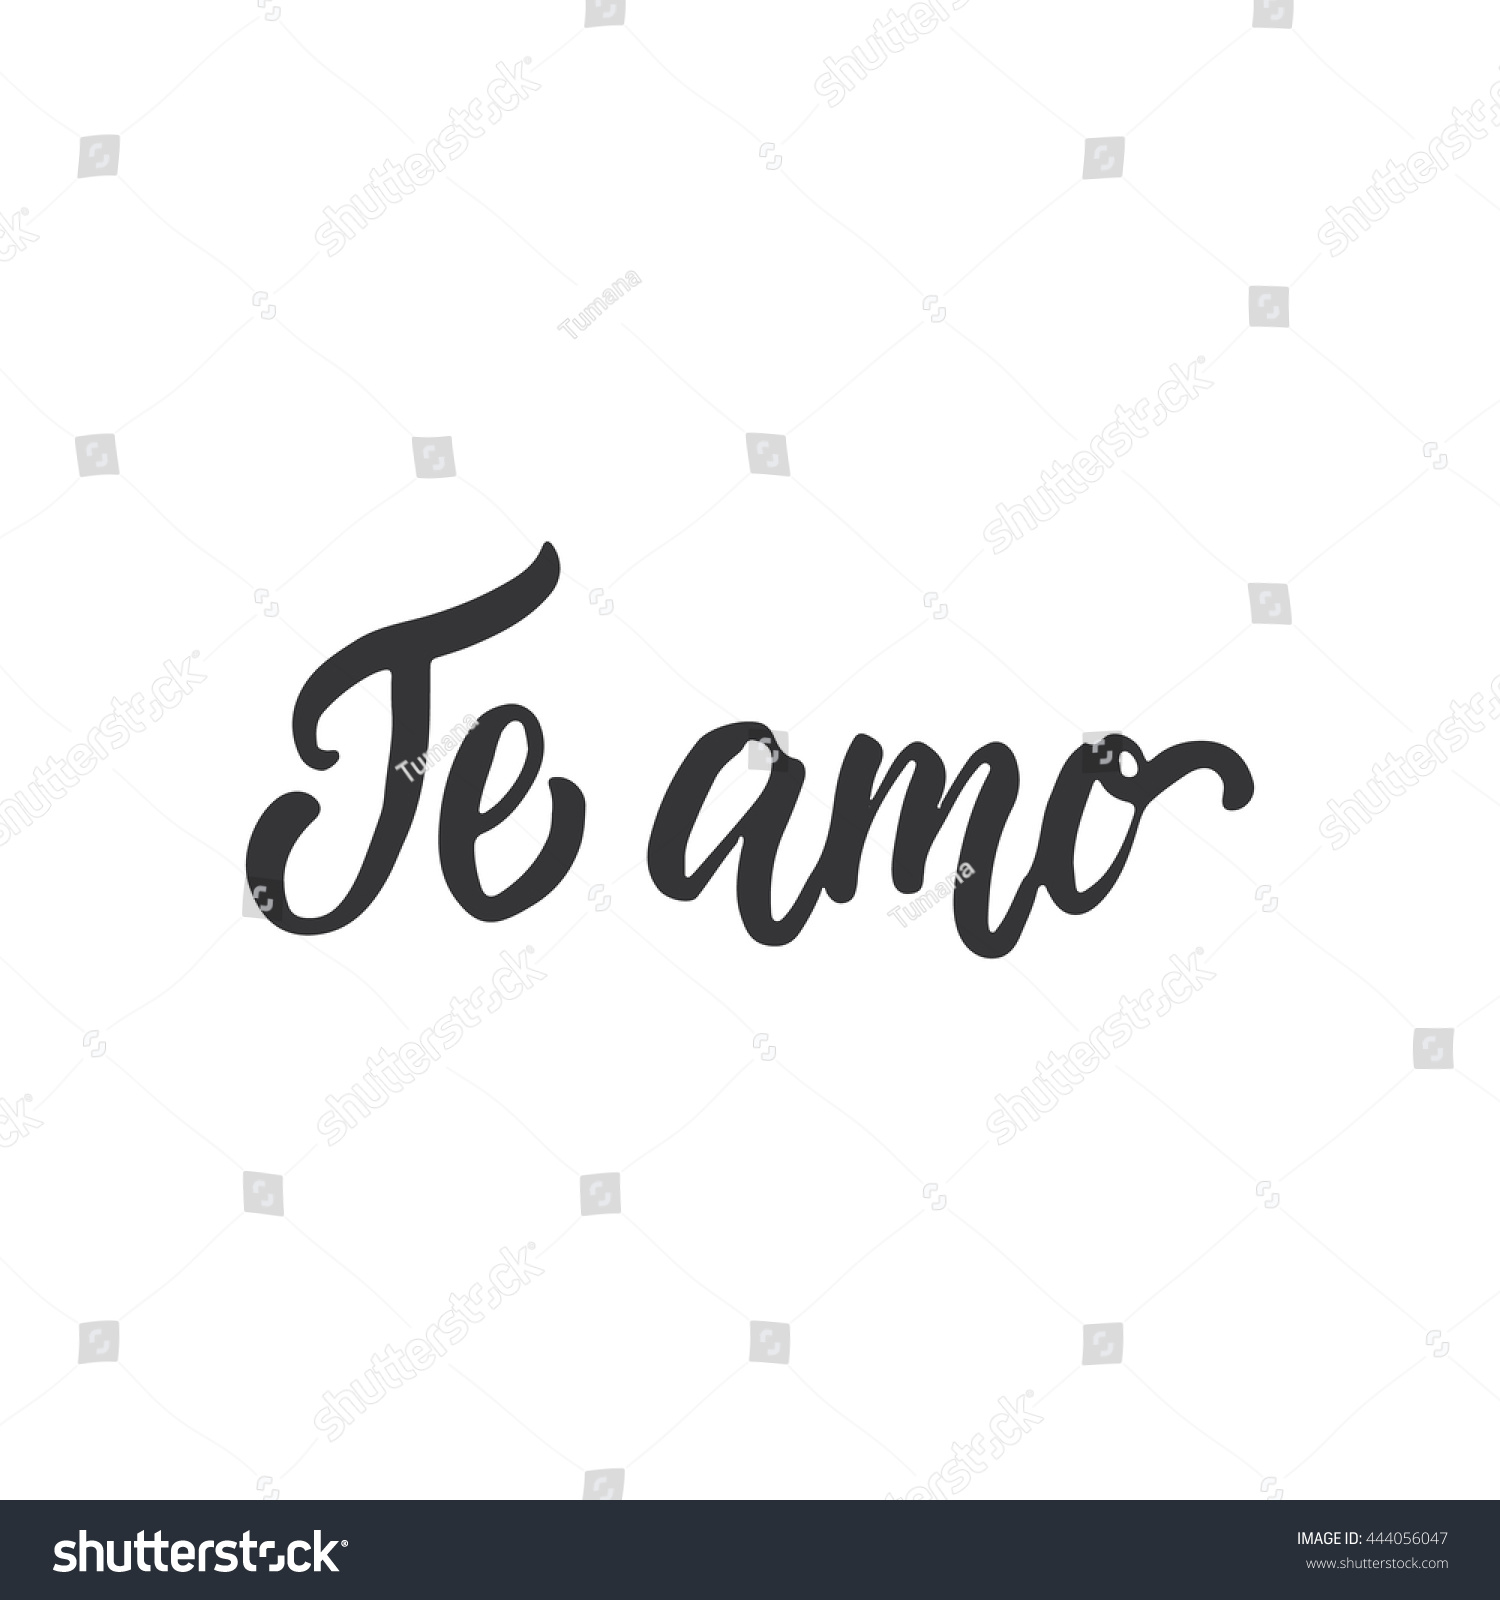 Te Amo Love You Spanish Text Calligraphy Vector Image 536